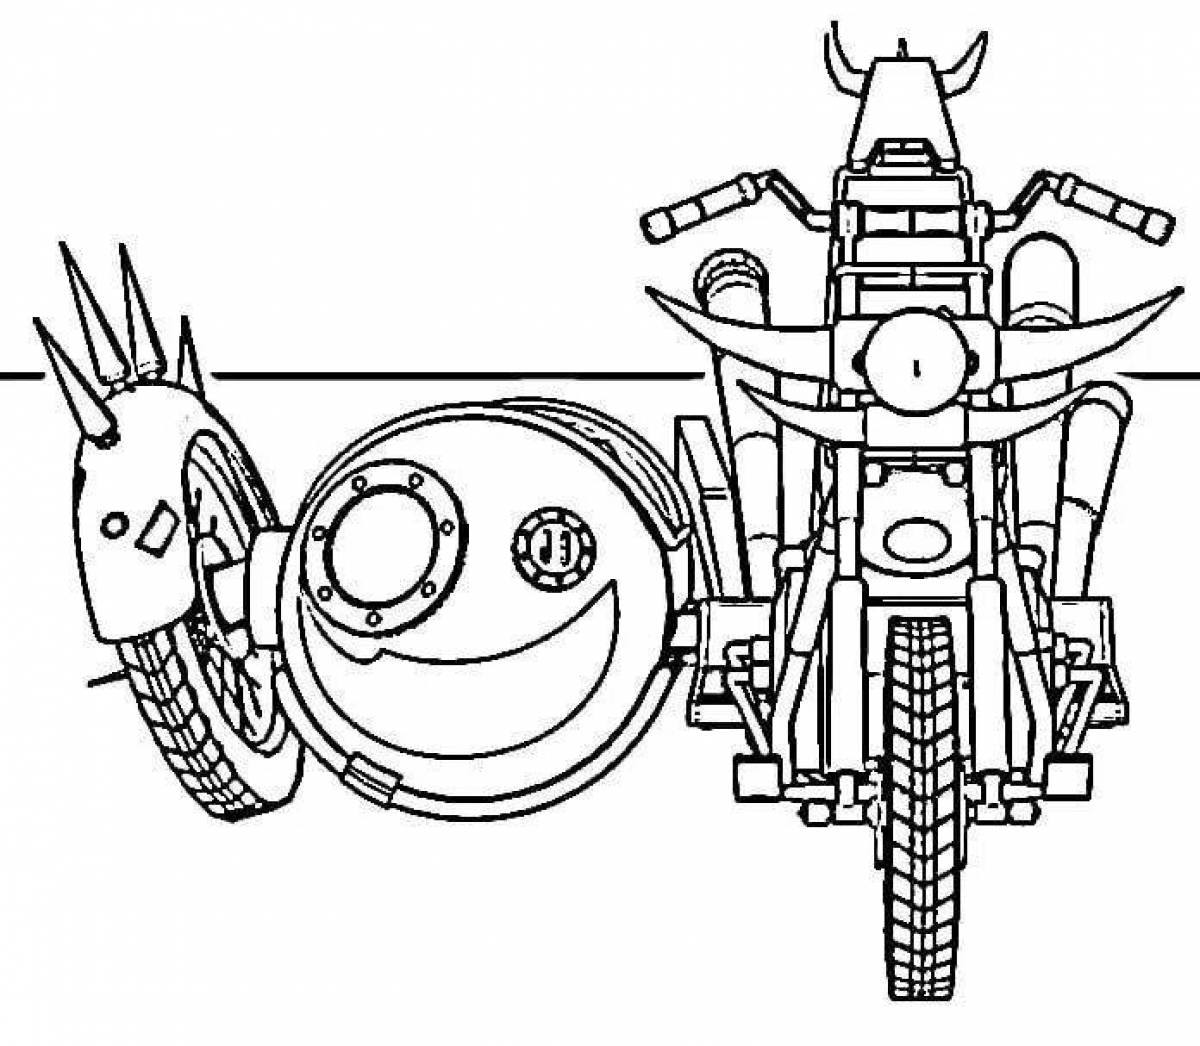 Coloring page royal motorcycle ural